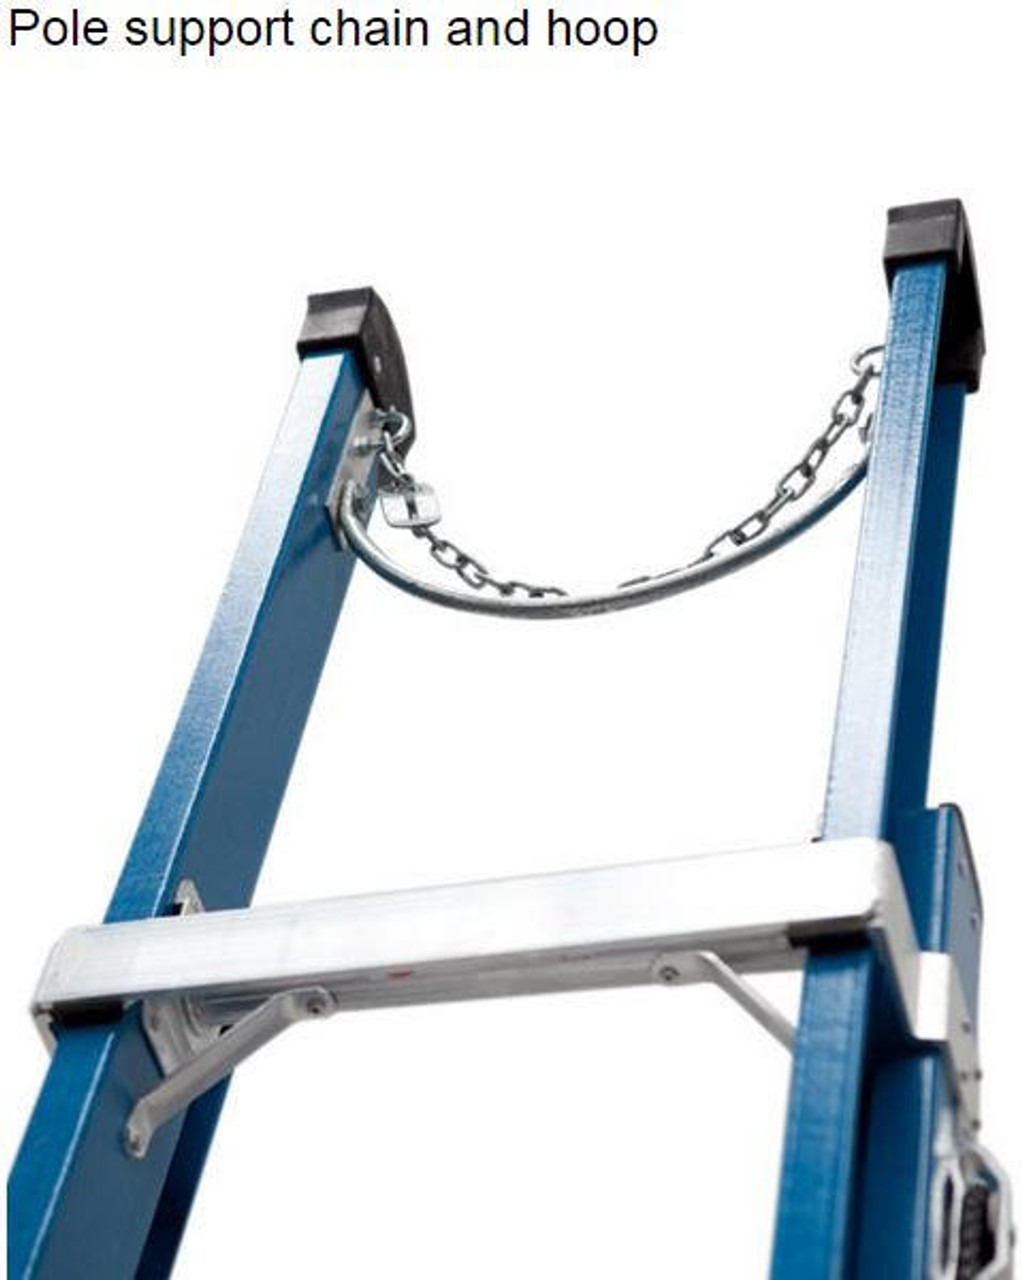 Bailey Extension Ladder Fibreglass 140kg 5.7-9.3m Industrial FXN18/31 FS20411